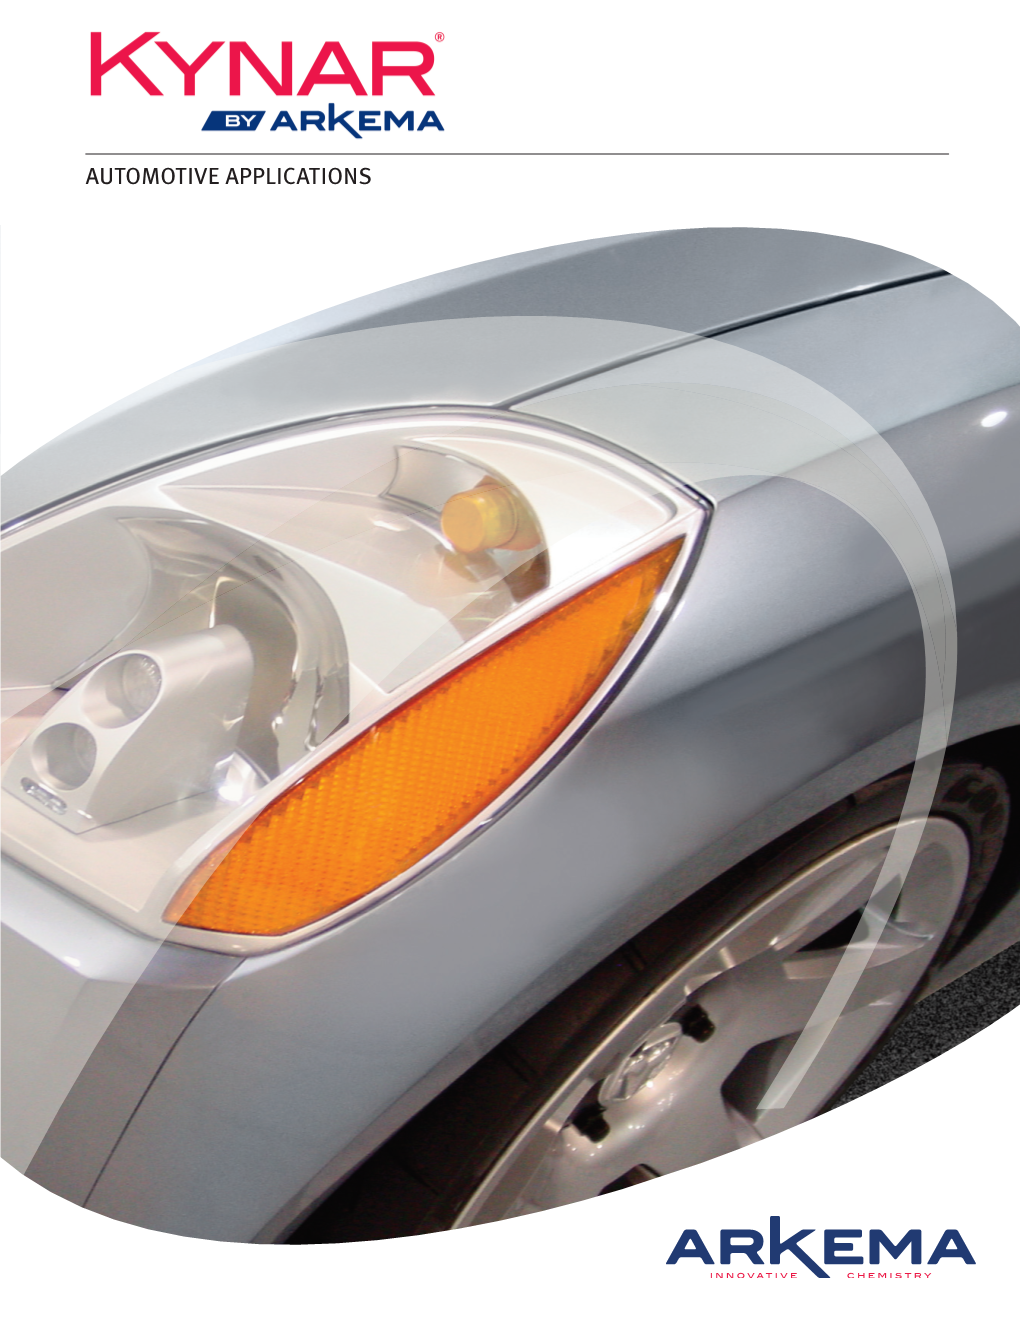 Kynar® Automotive Applications Brochure